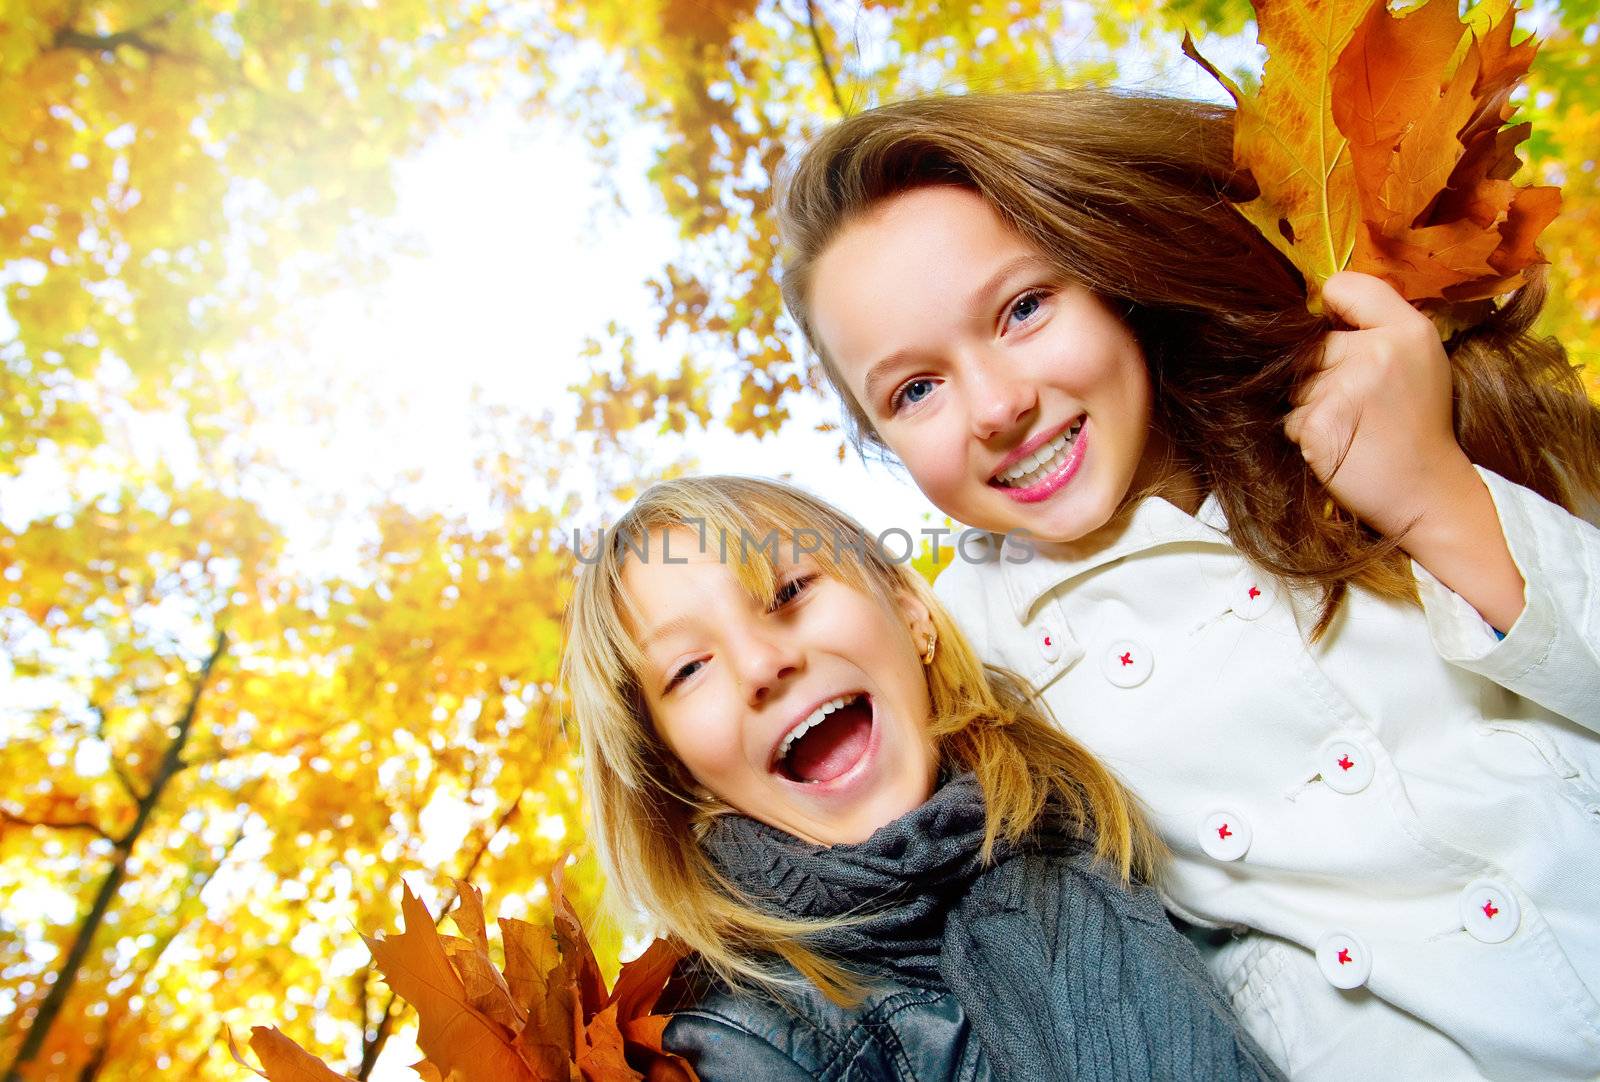 Beautiful Teenage Girls Having Fun in Autumn Park .Outdoor by SubbotinaA